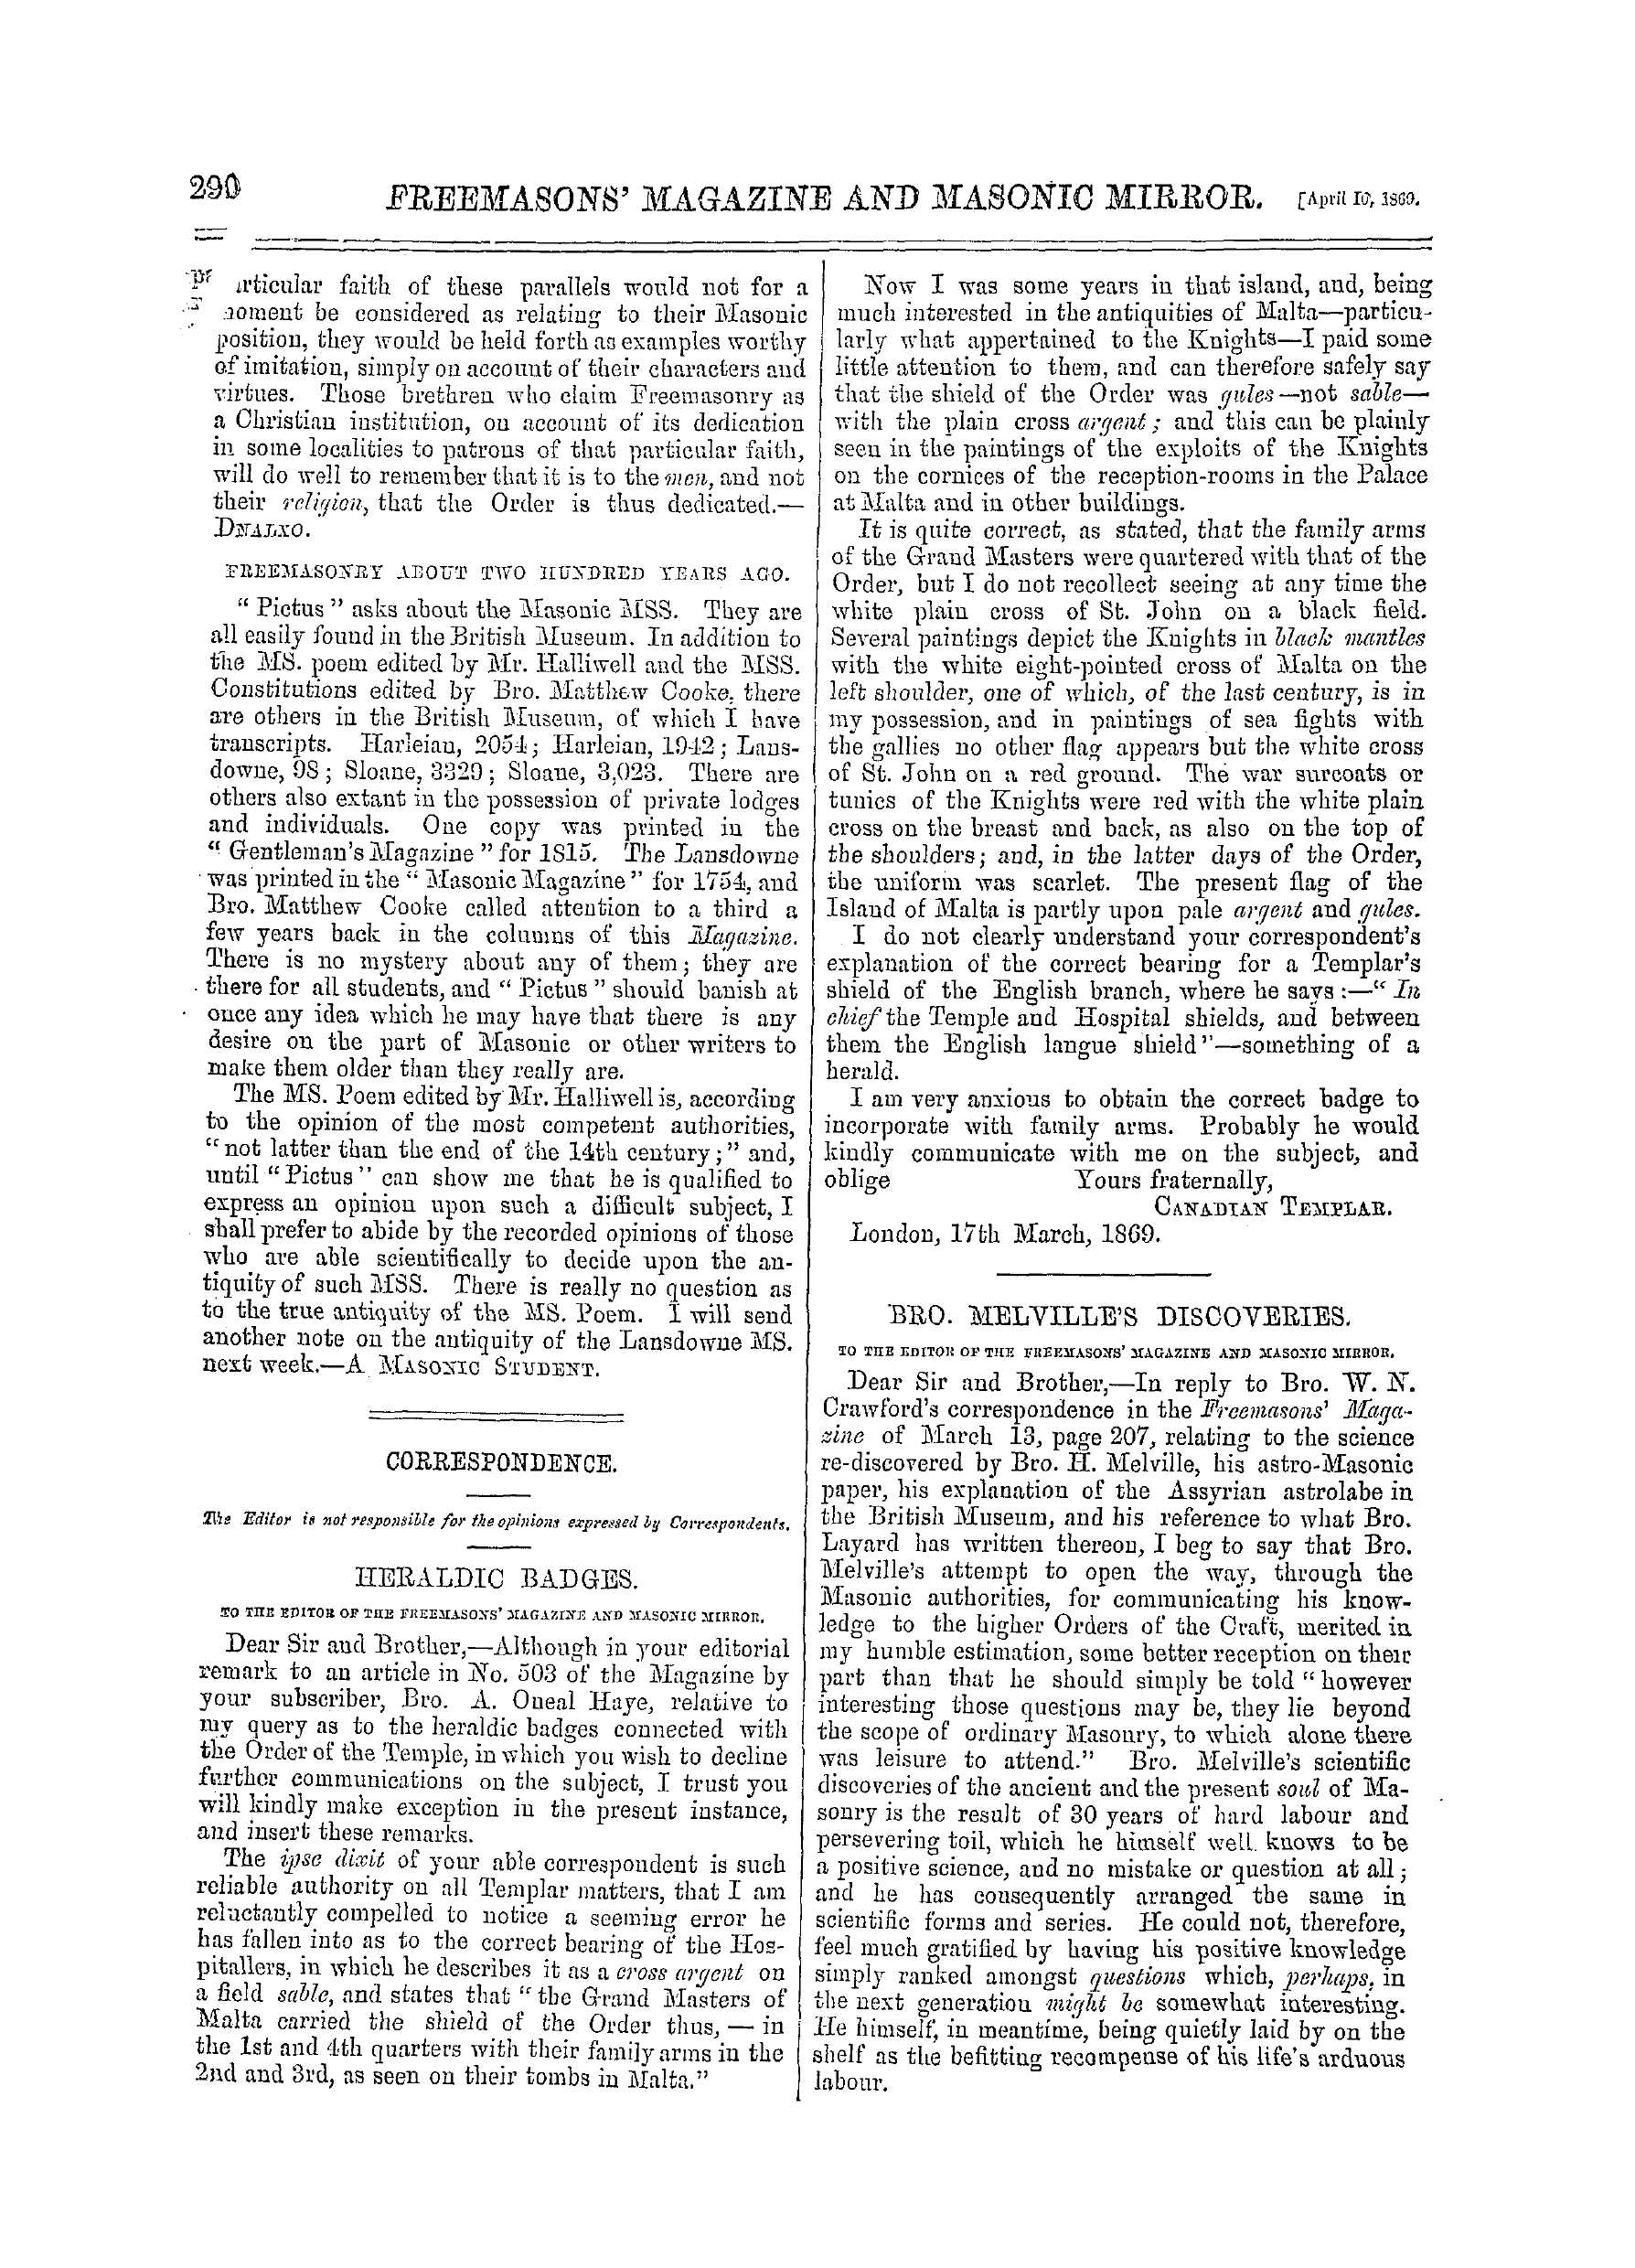 The Freemasons' Monthly Magazine: 1869-04-10 - Correspondence.